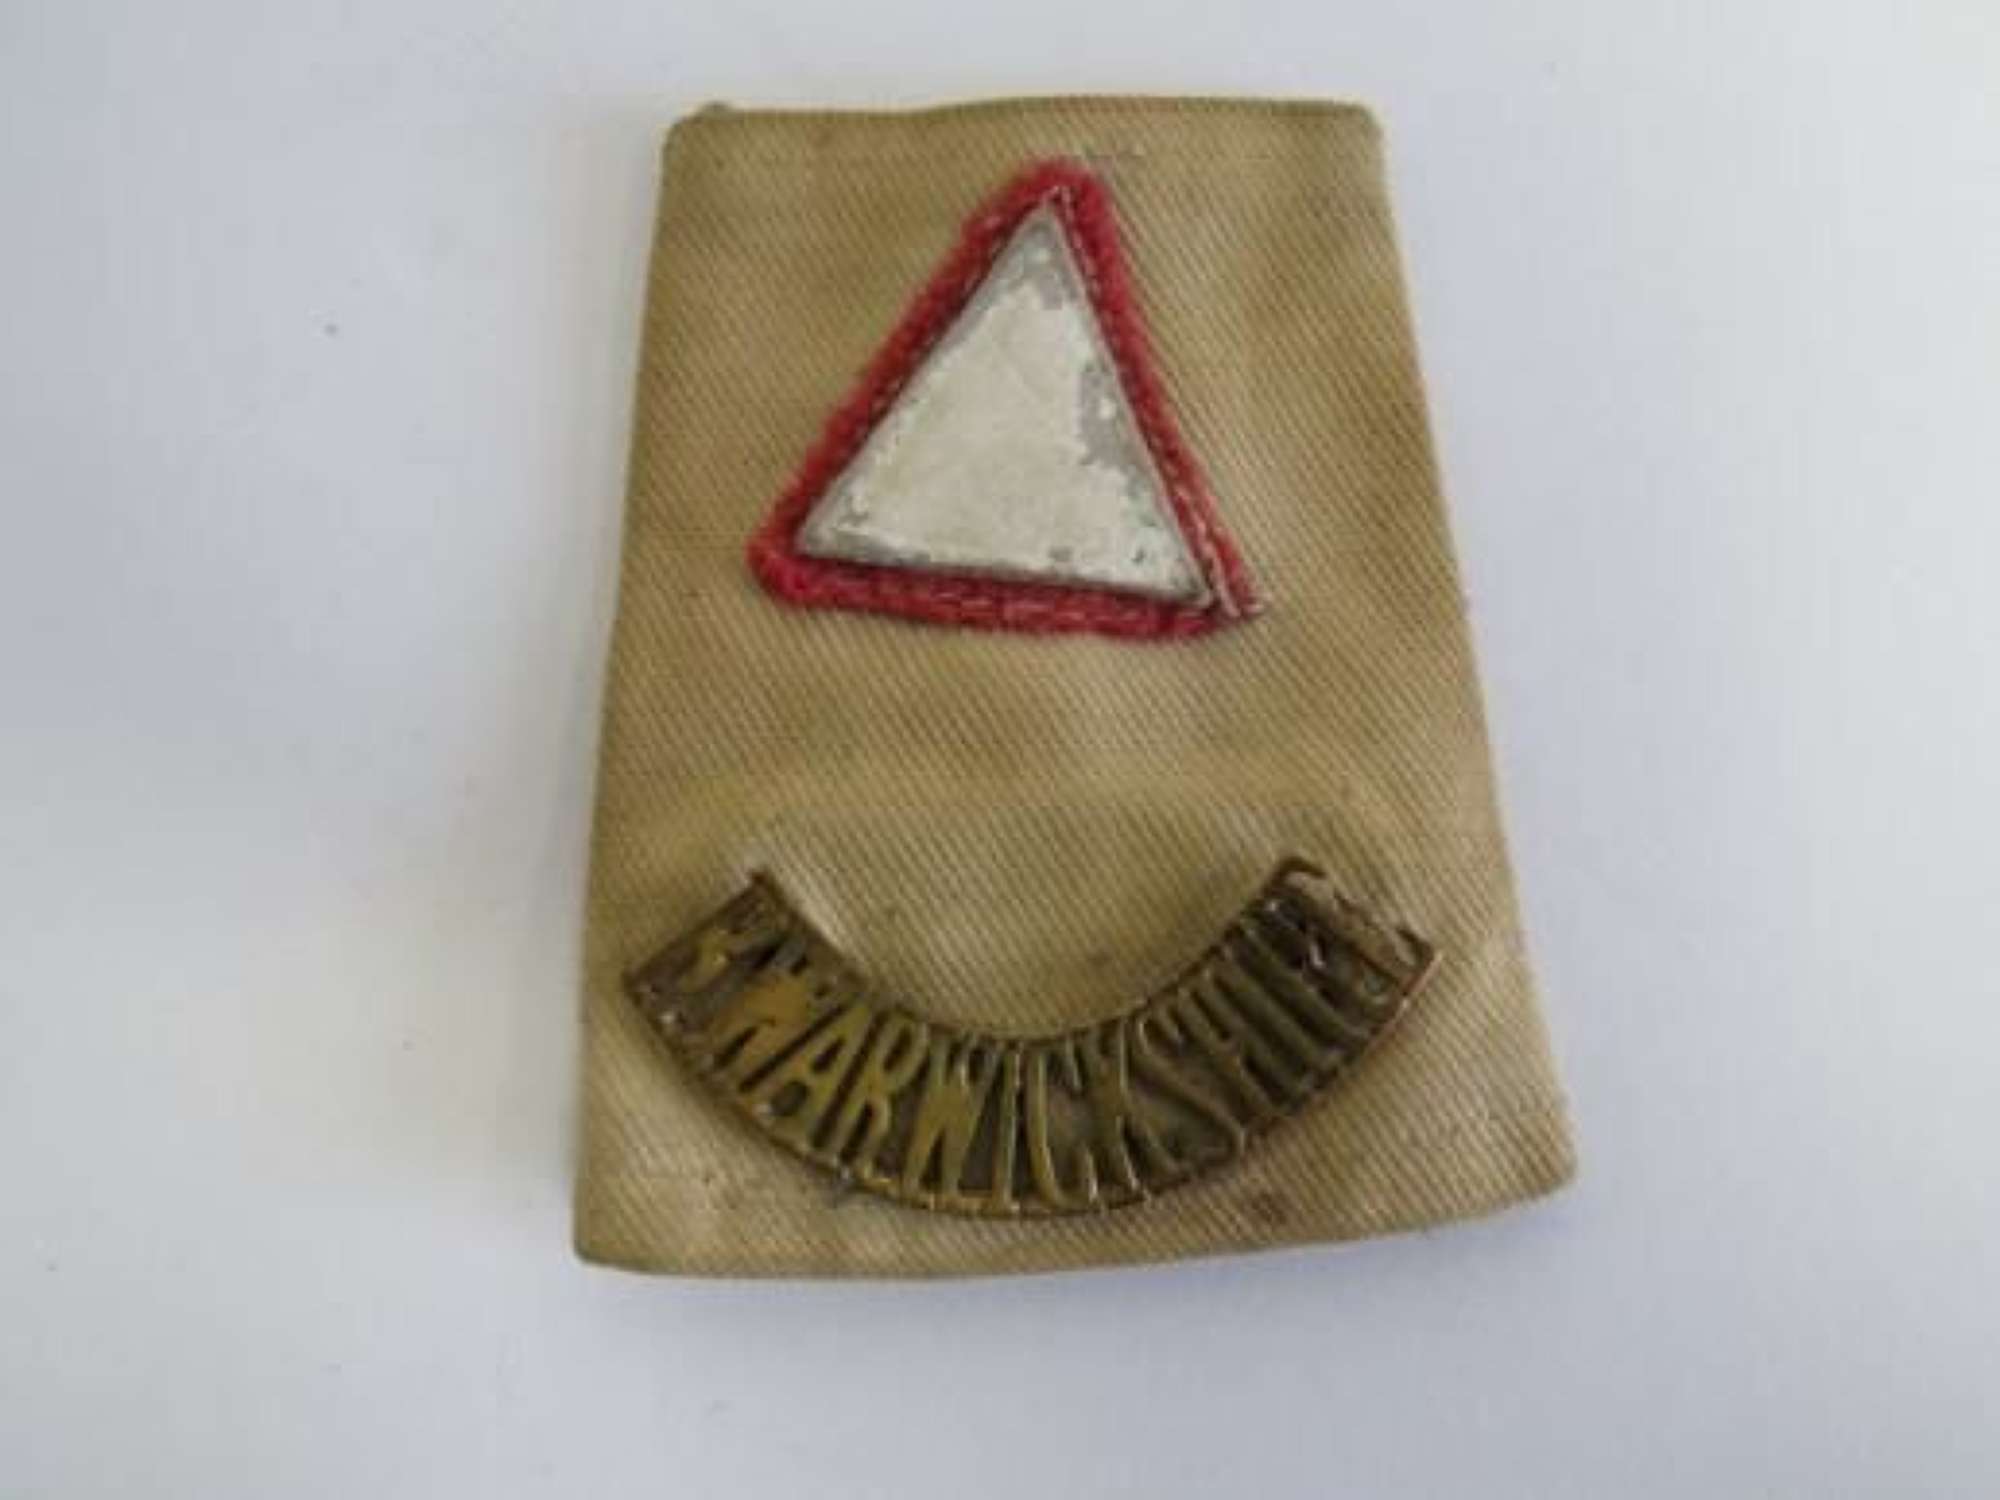 Royal Warwickshire 1st Infantry Division Slip On Badge